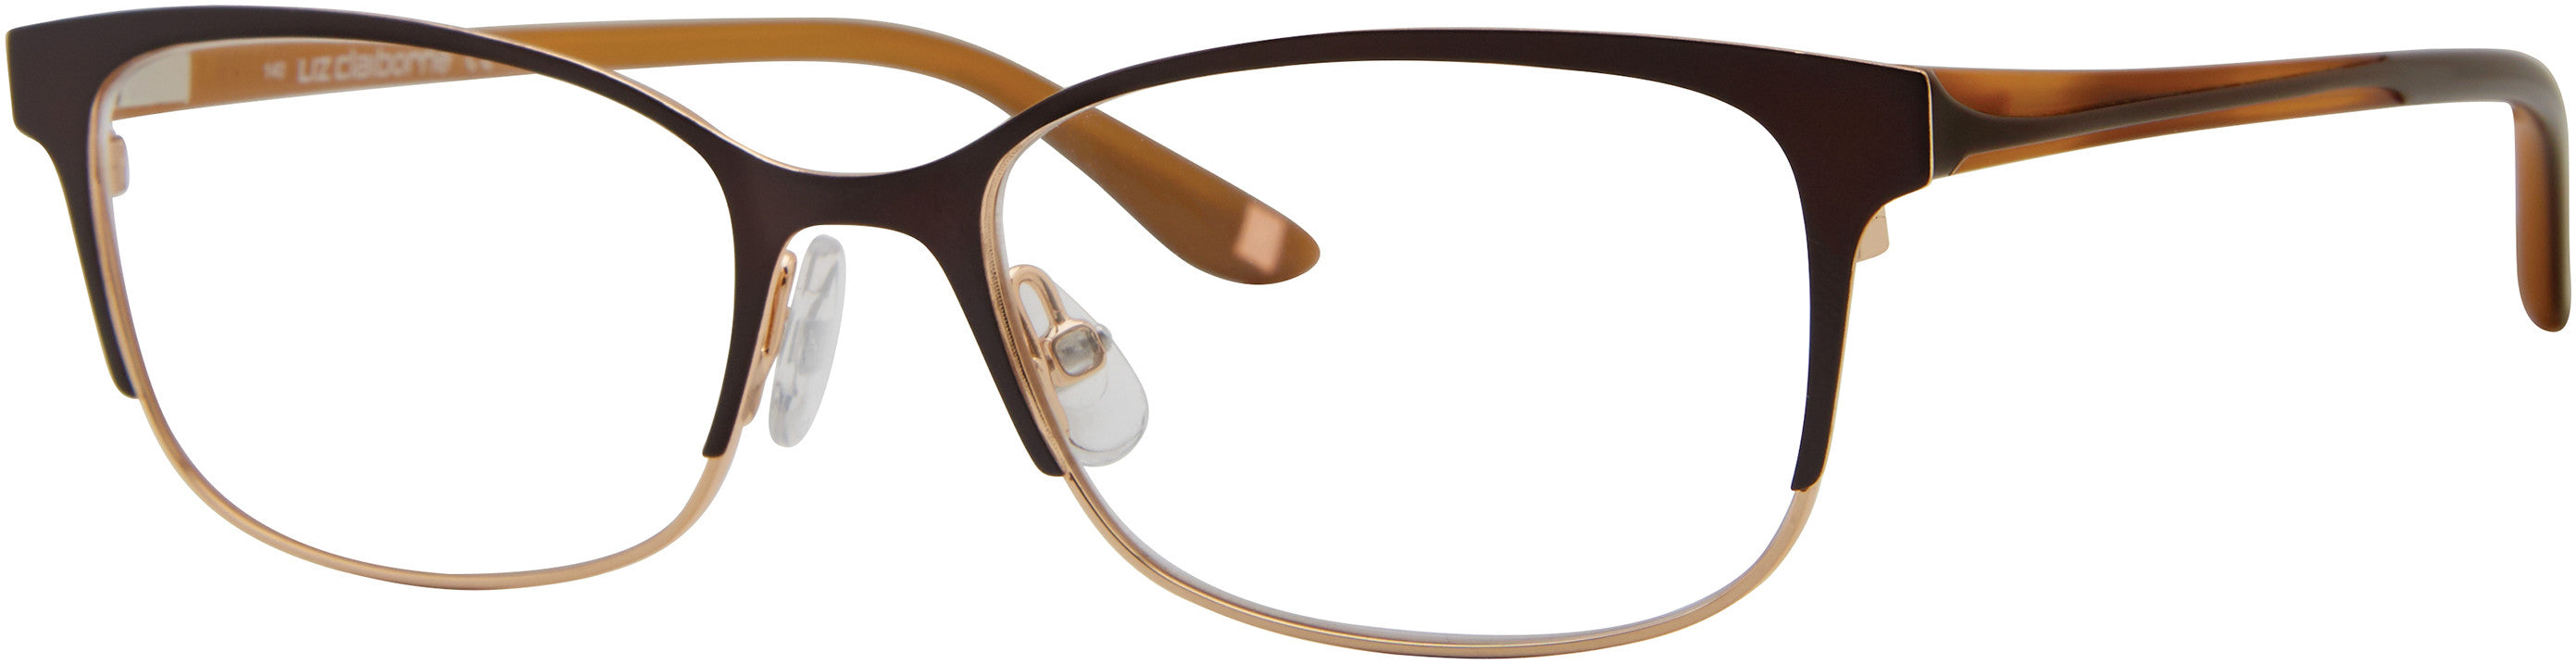  Liz Claiborne 644 Rectangular Eyeglasses 0UFM-0UFM  Bwgd Grid (00 Demo Lens)